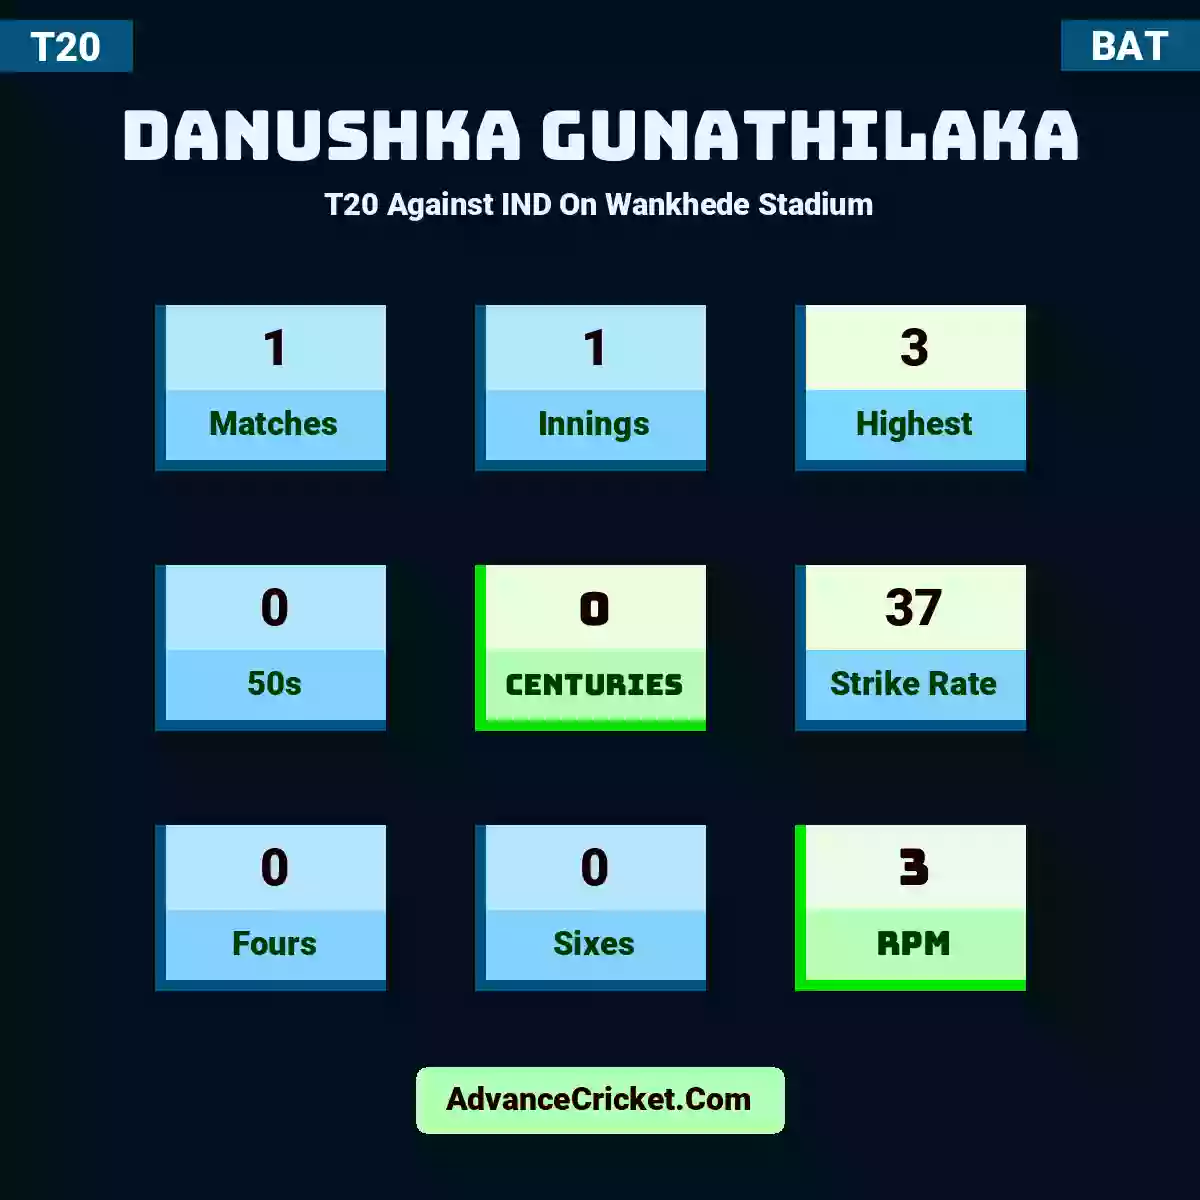 Danushka Gunathilaka T20  Against IND On Wankhede Stadium, Danushka Gunathilaka played 1 matches, scored 3 runs as highest, 0 half-centuries, and 0 centuries, with a strike rate of 37. D.Gunathilaka hit 0 fours and 0 sixes, with an RPM of 3.